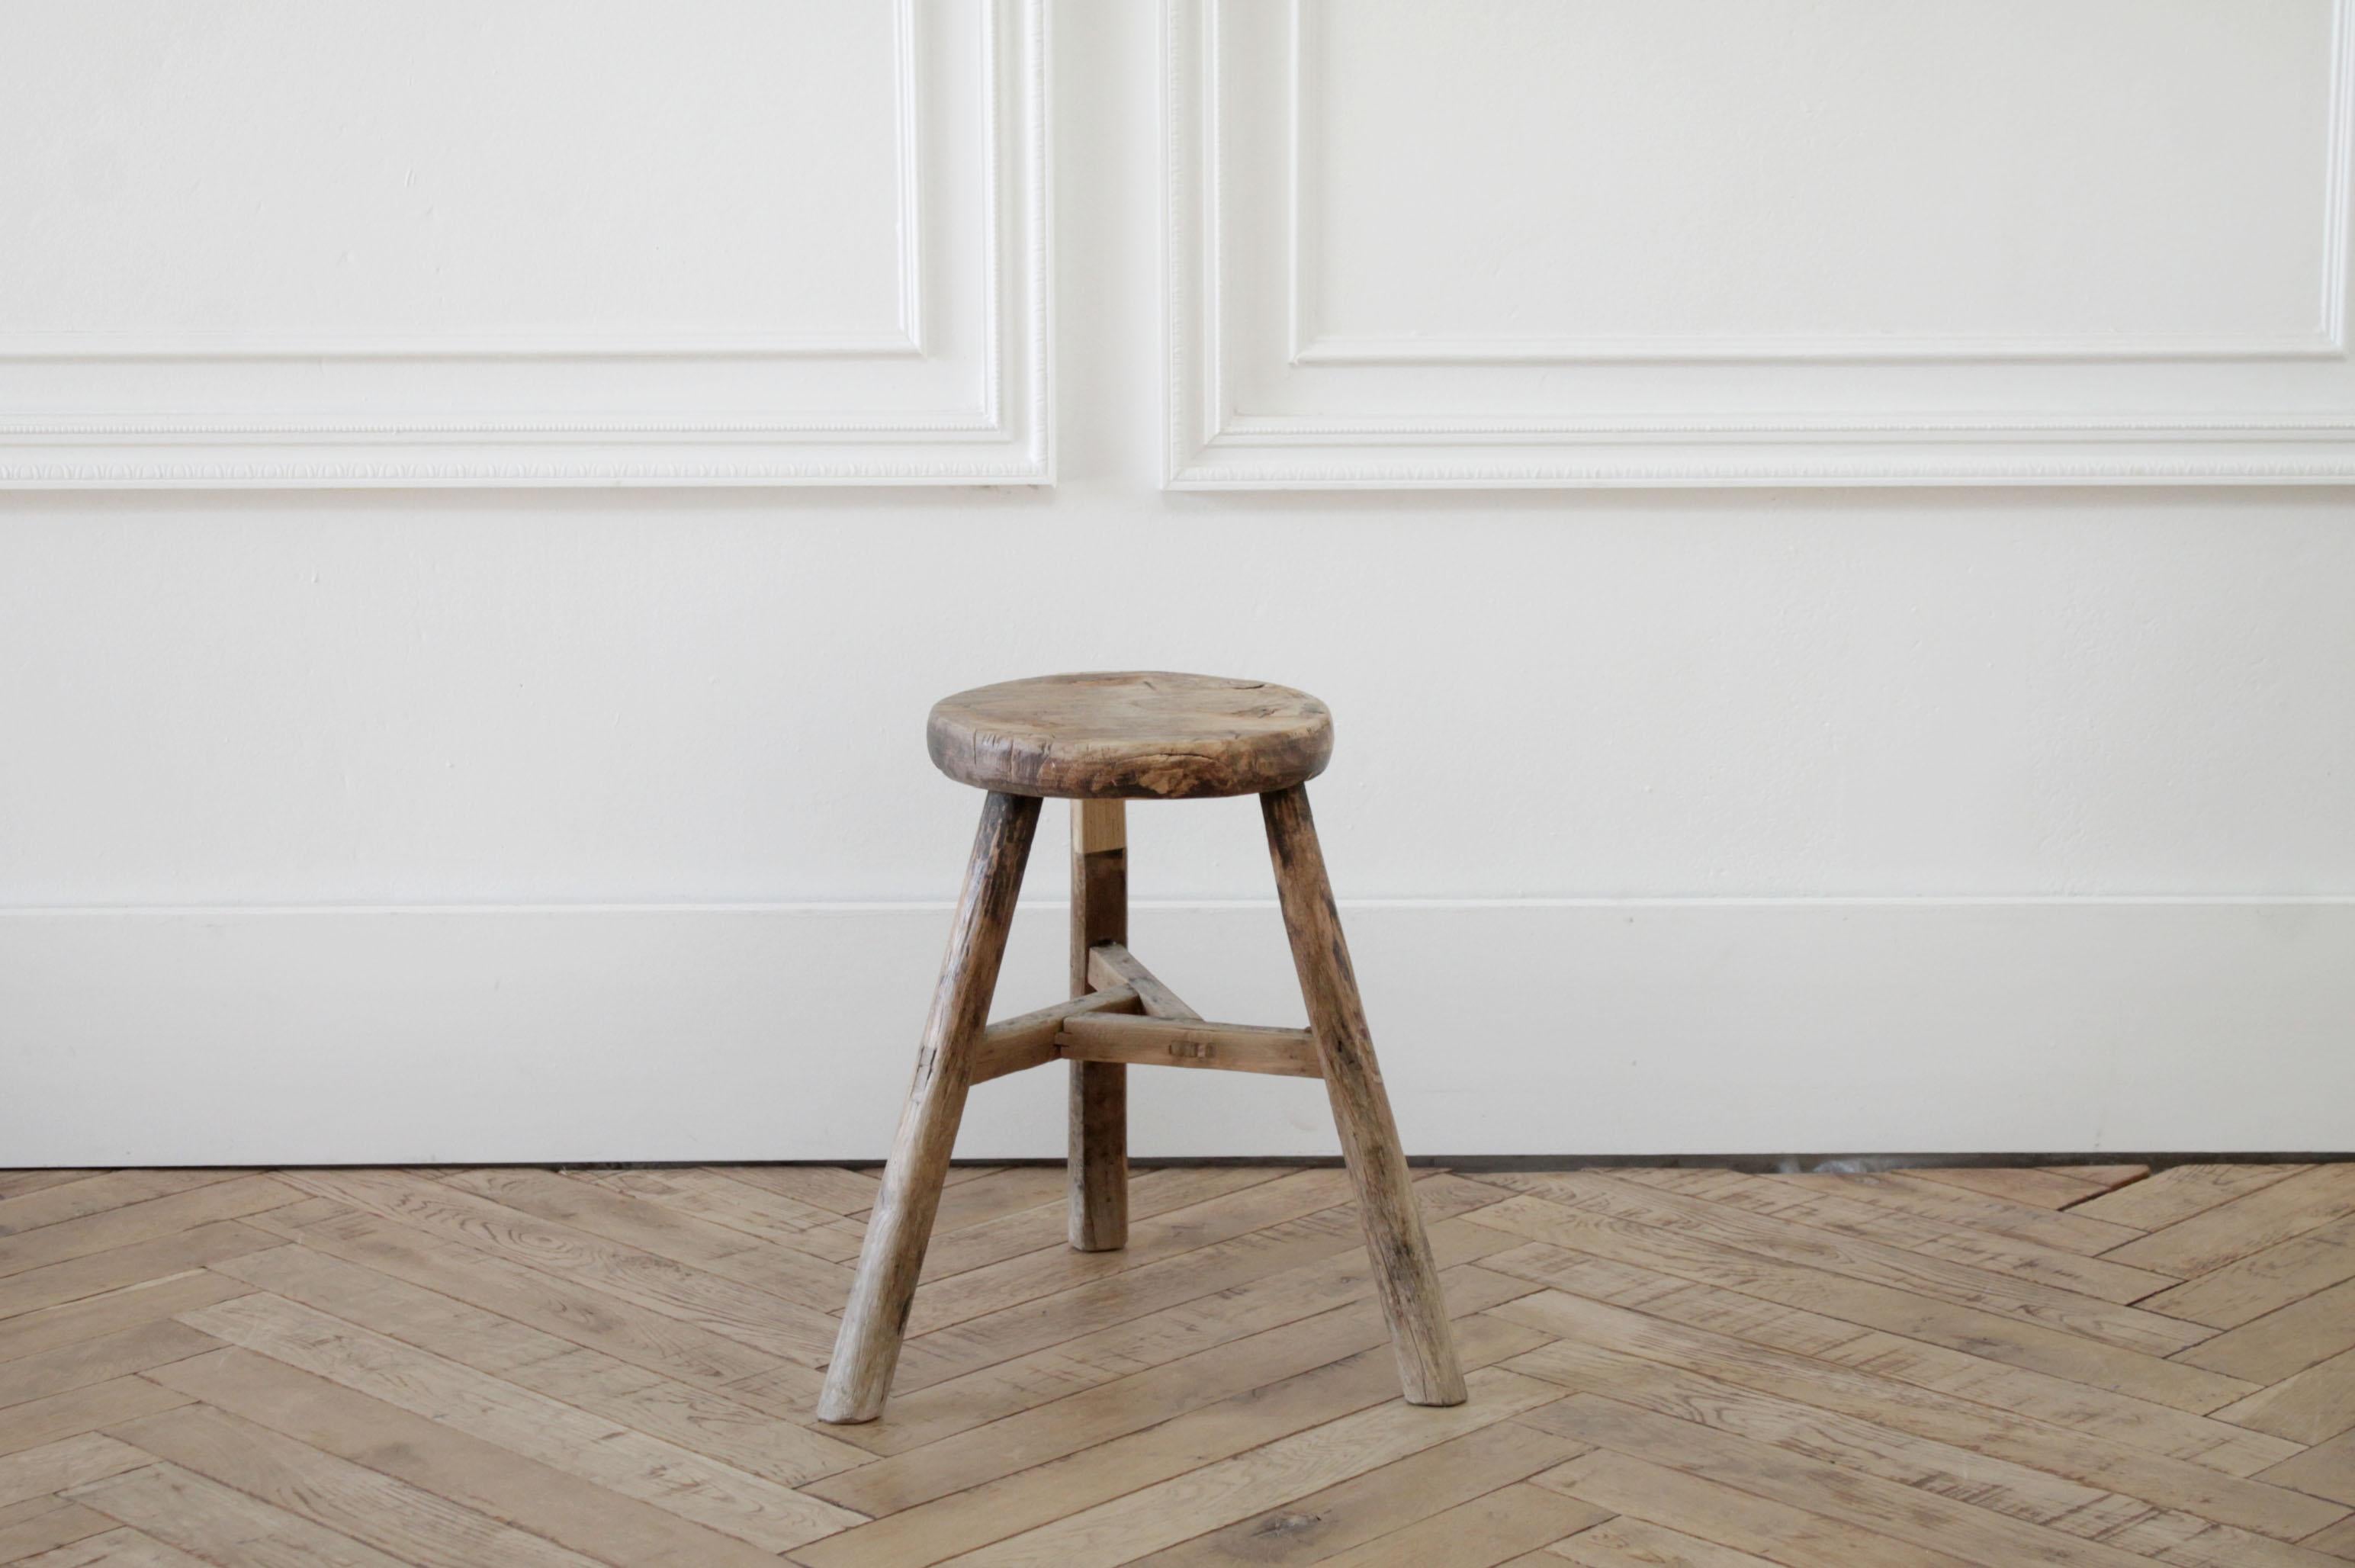 Petite antique wooden stool
Measures: 16